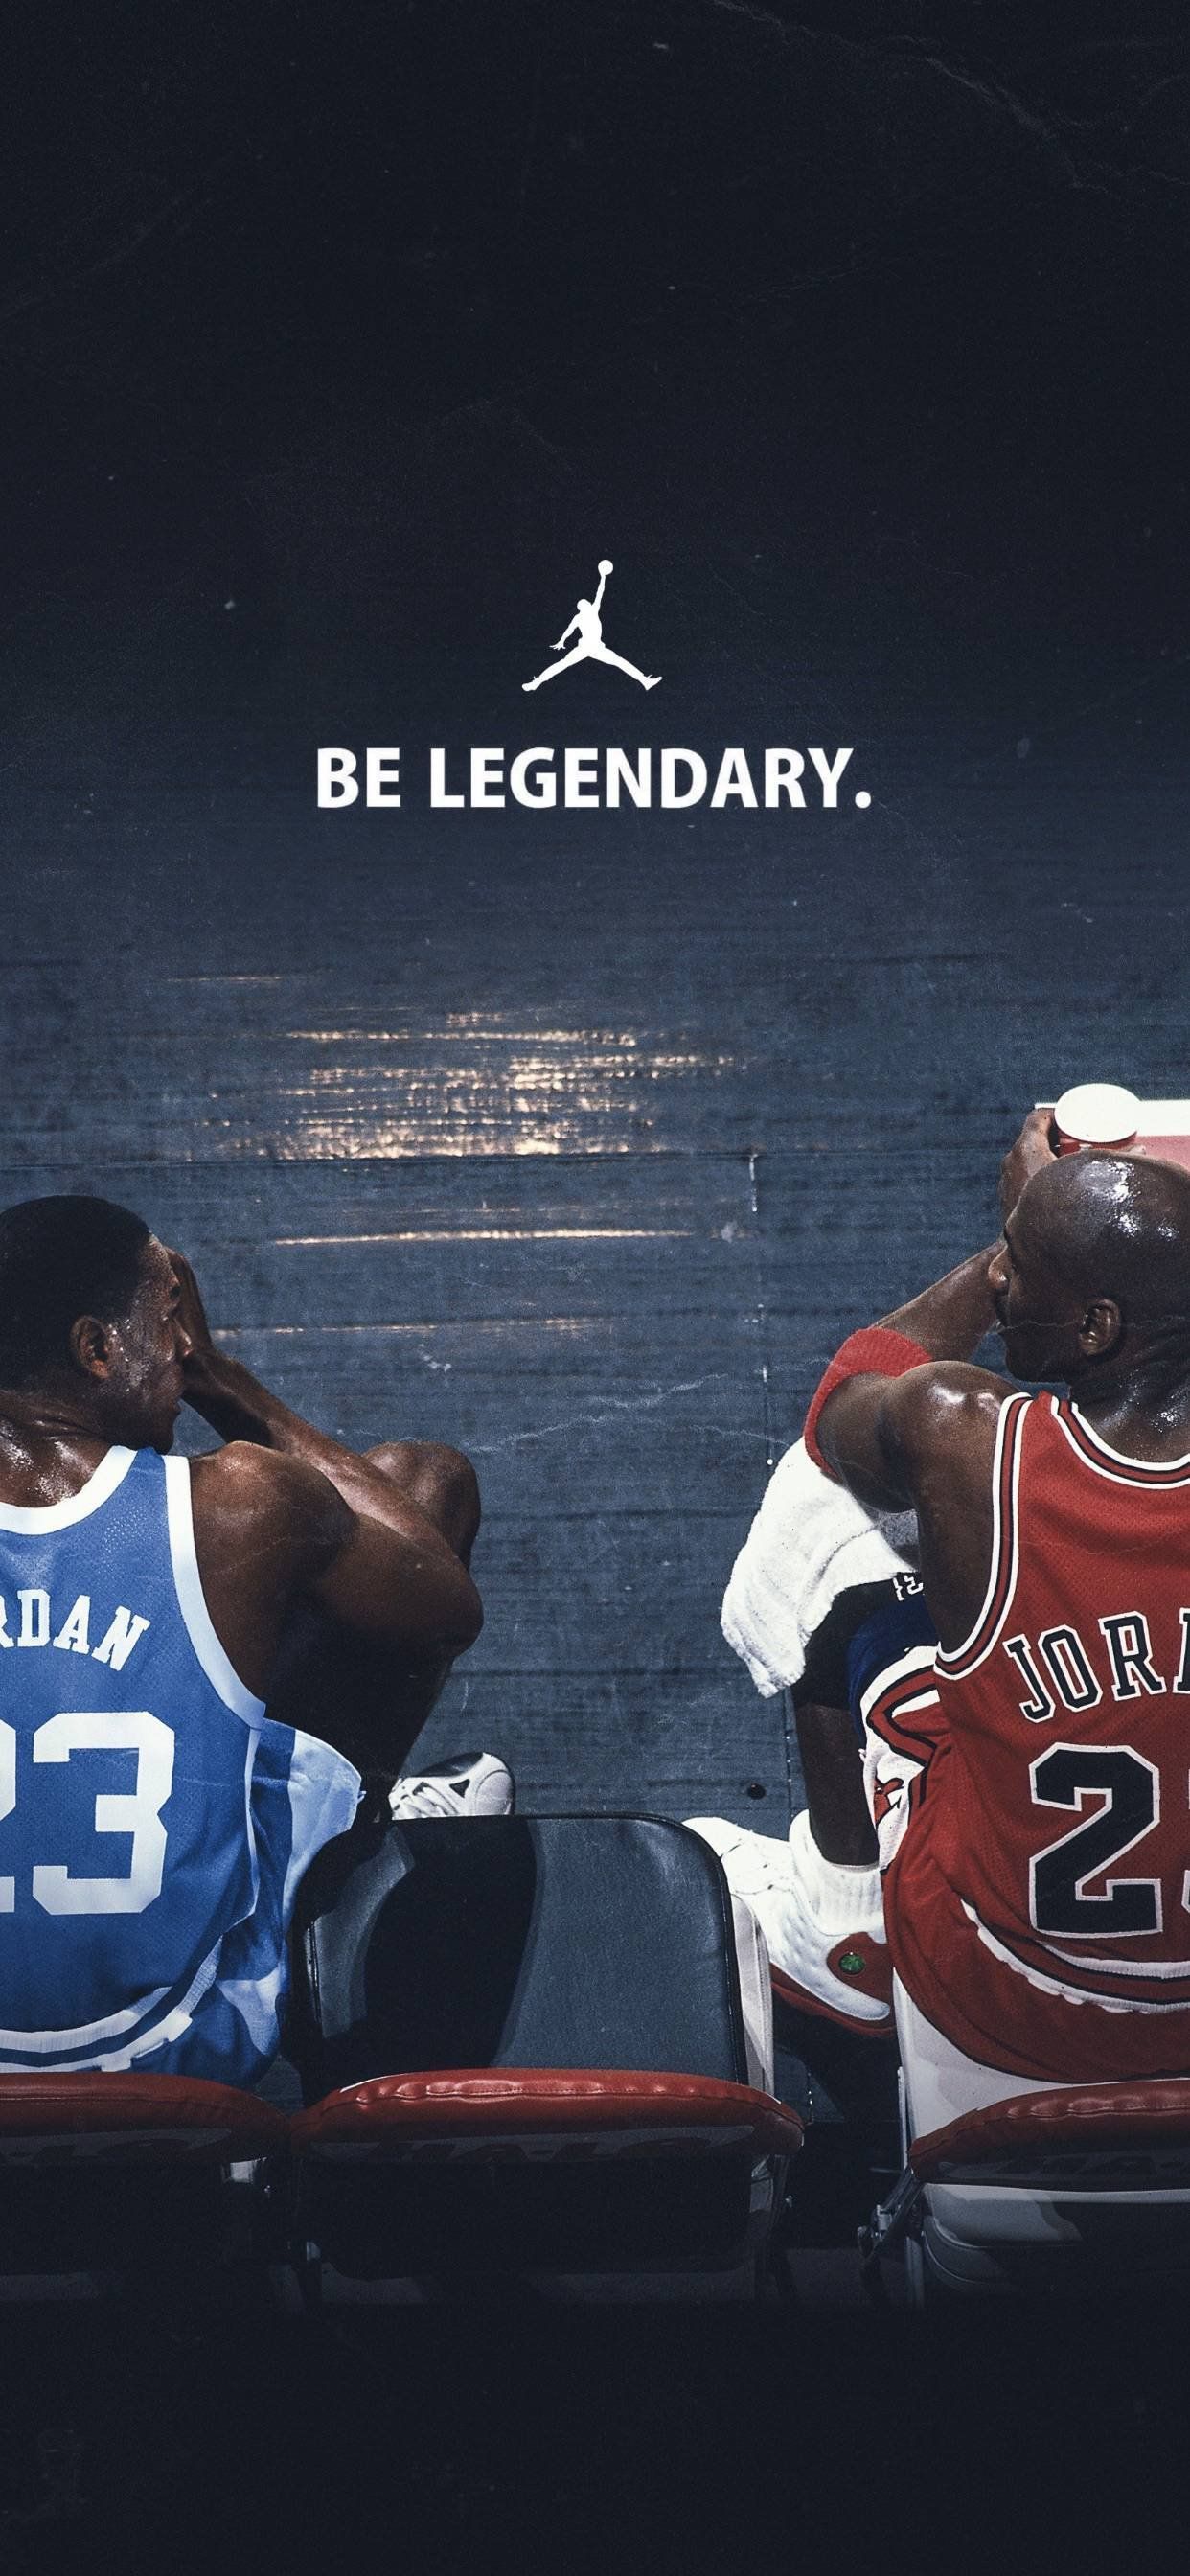 iPhone X Wallpaper Jordan. Michael jordan basketball, Michael jordan picture, Jordan logo wallpaper